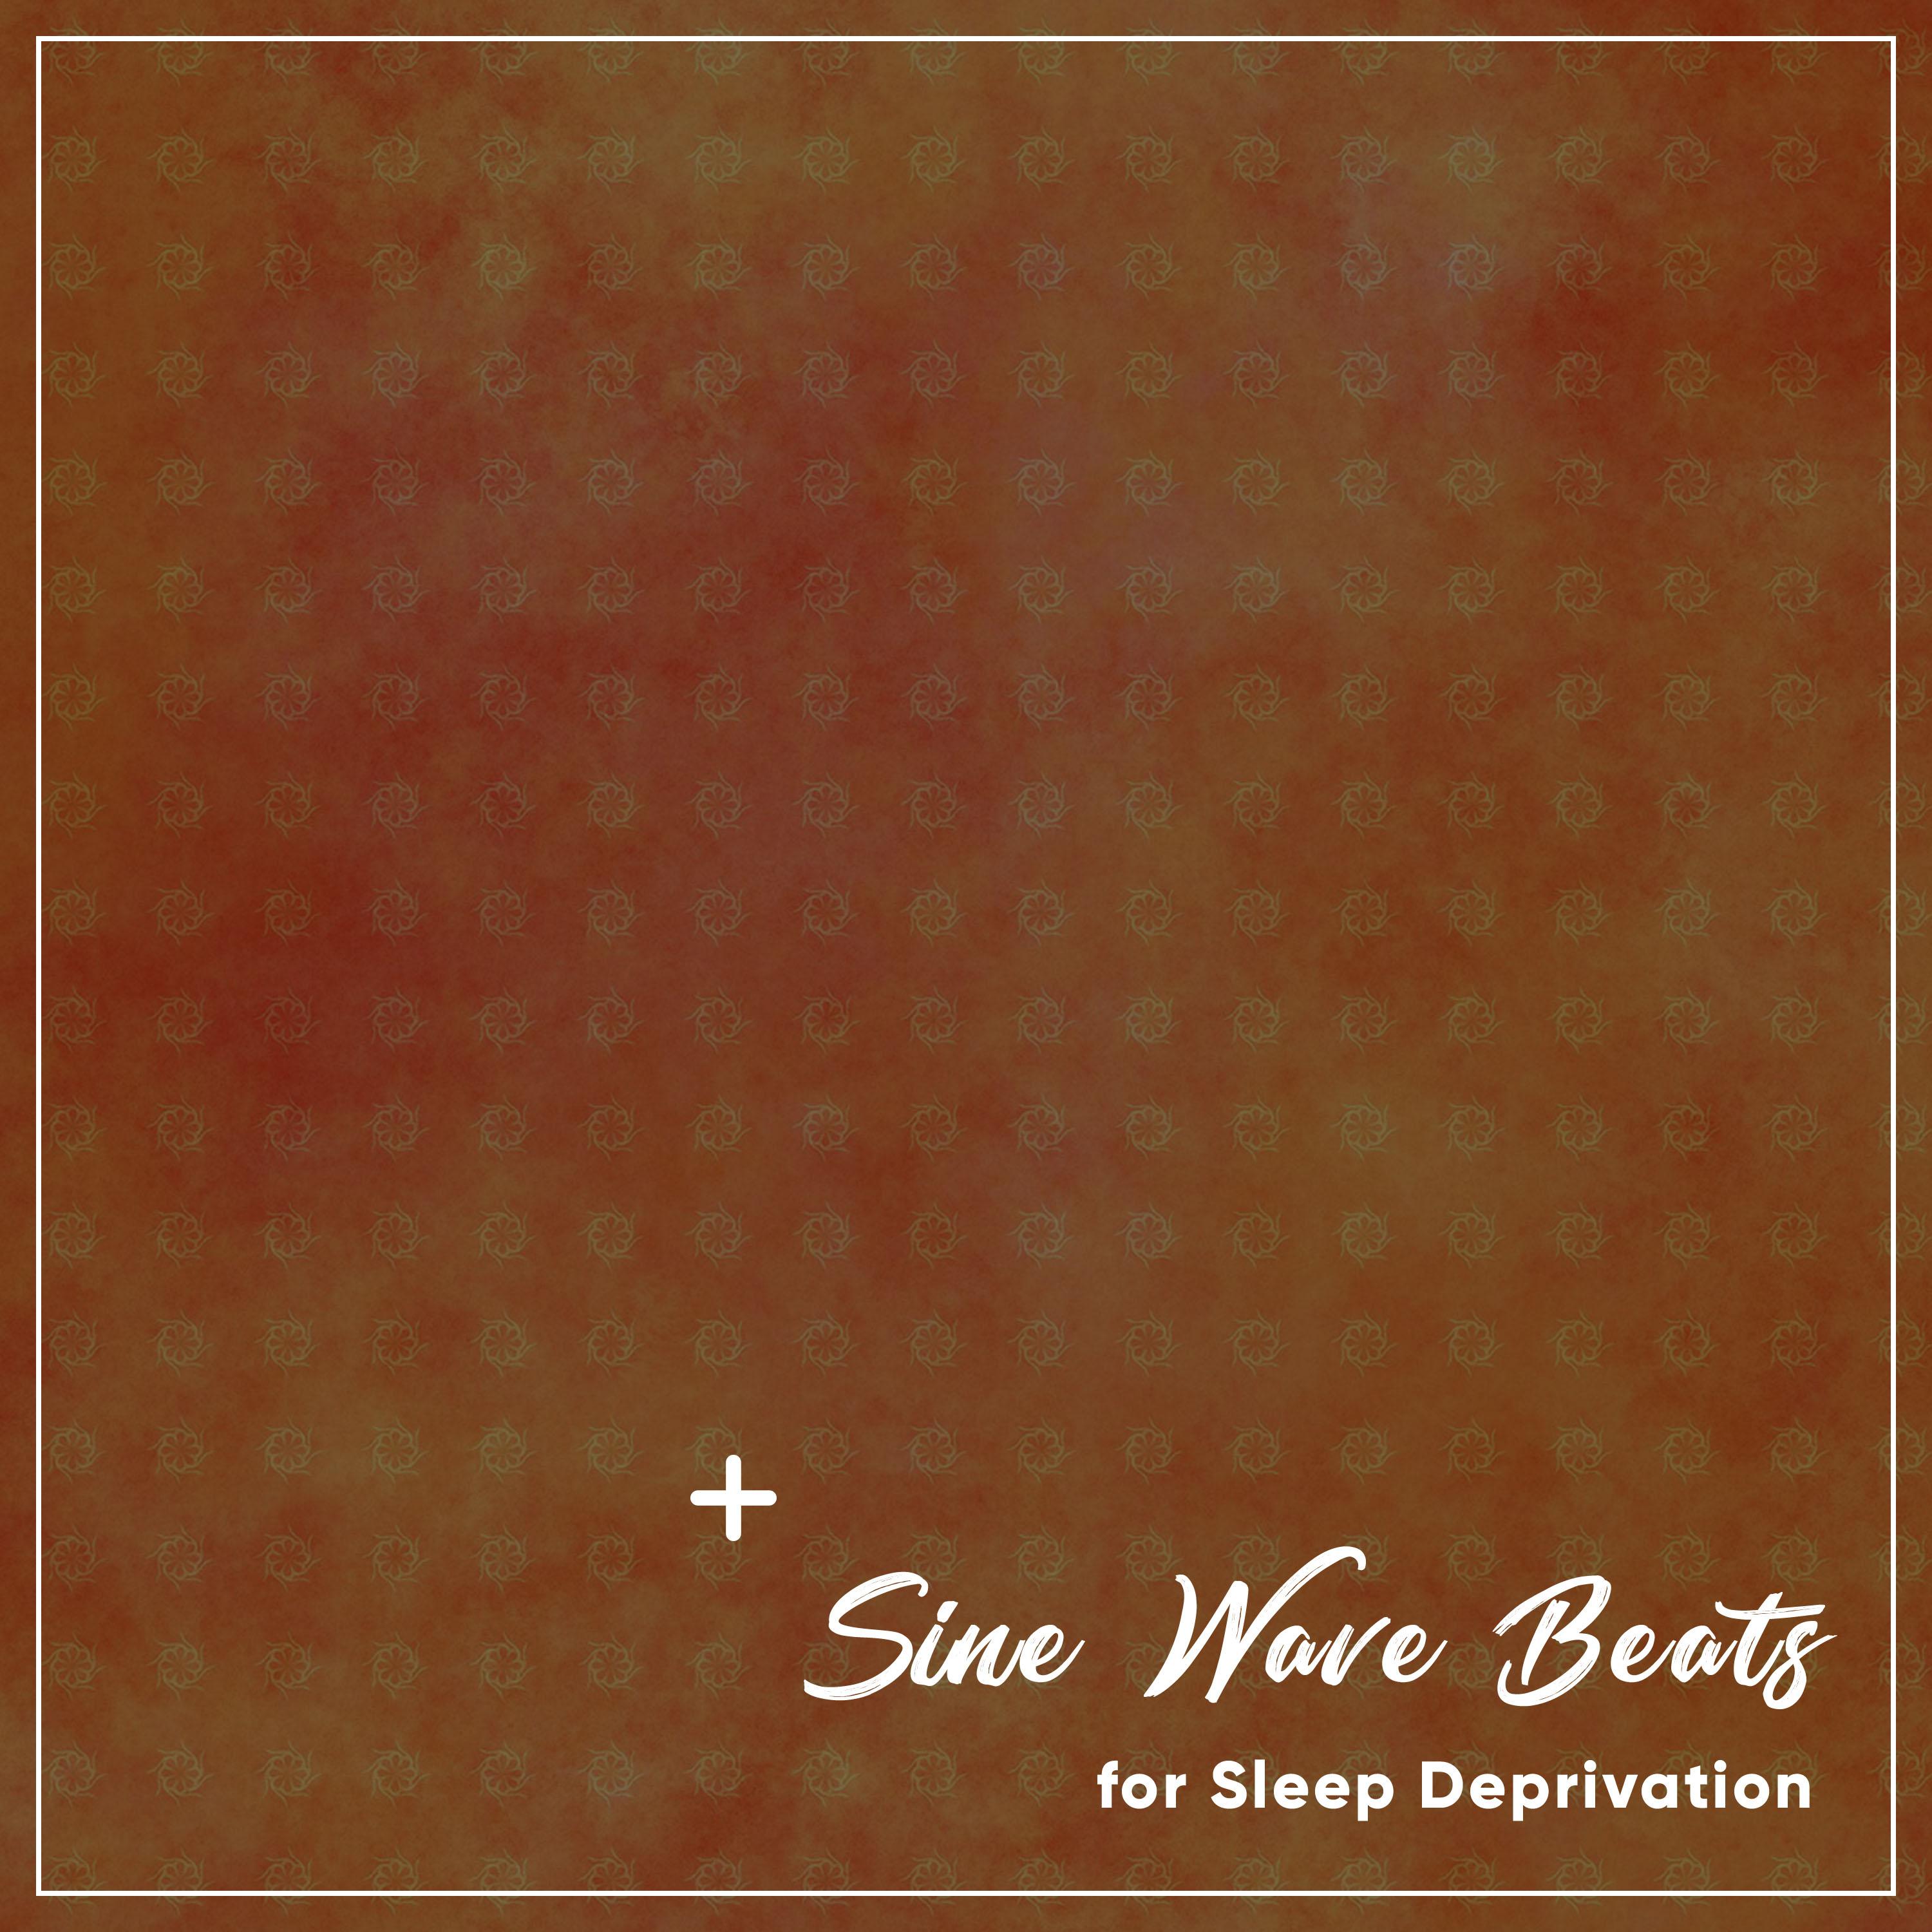 16 Sine Wave Beats for Sleep Deprivation